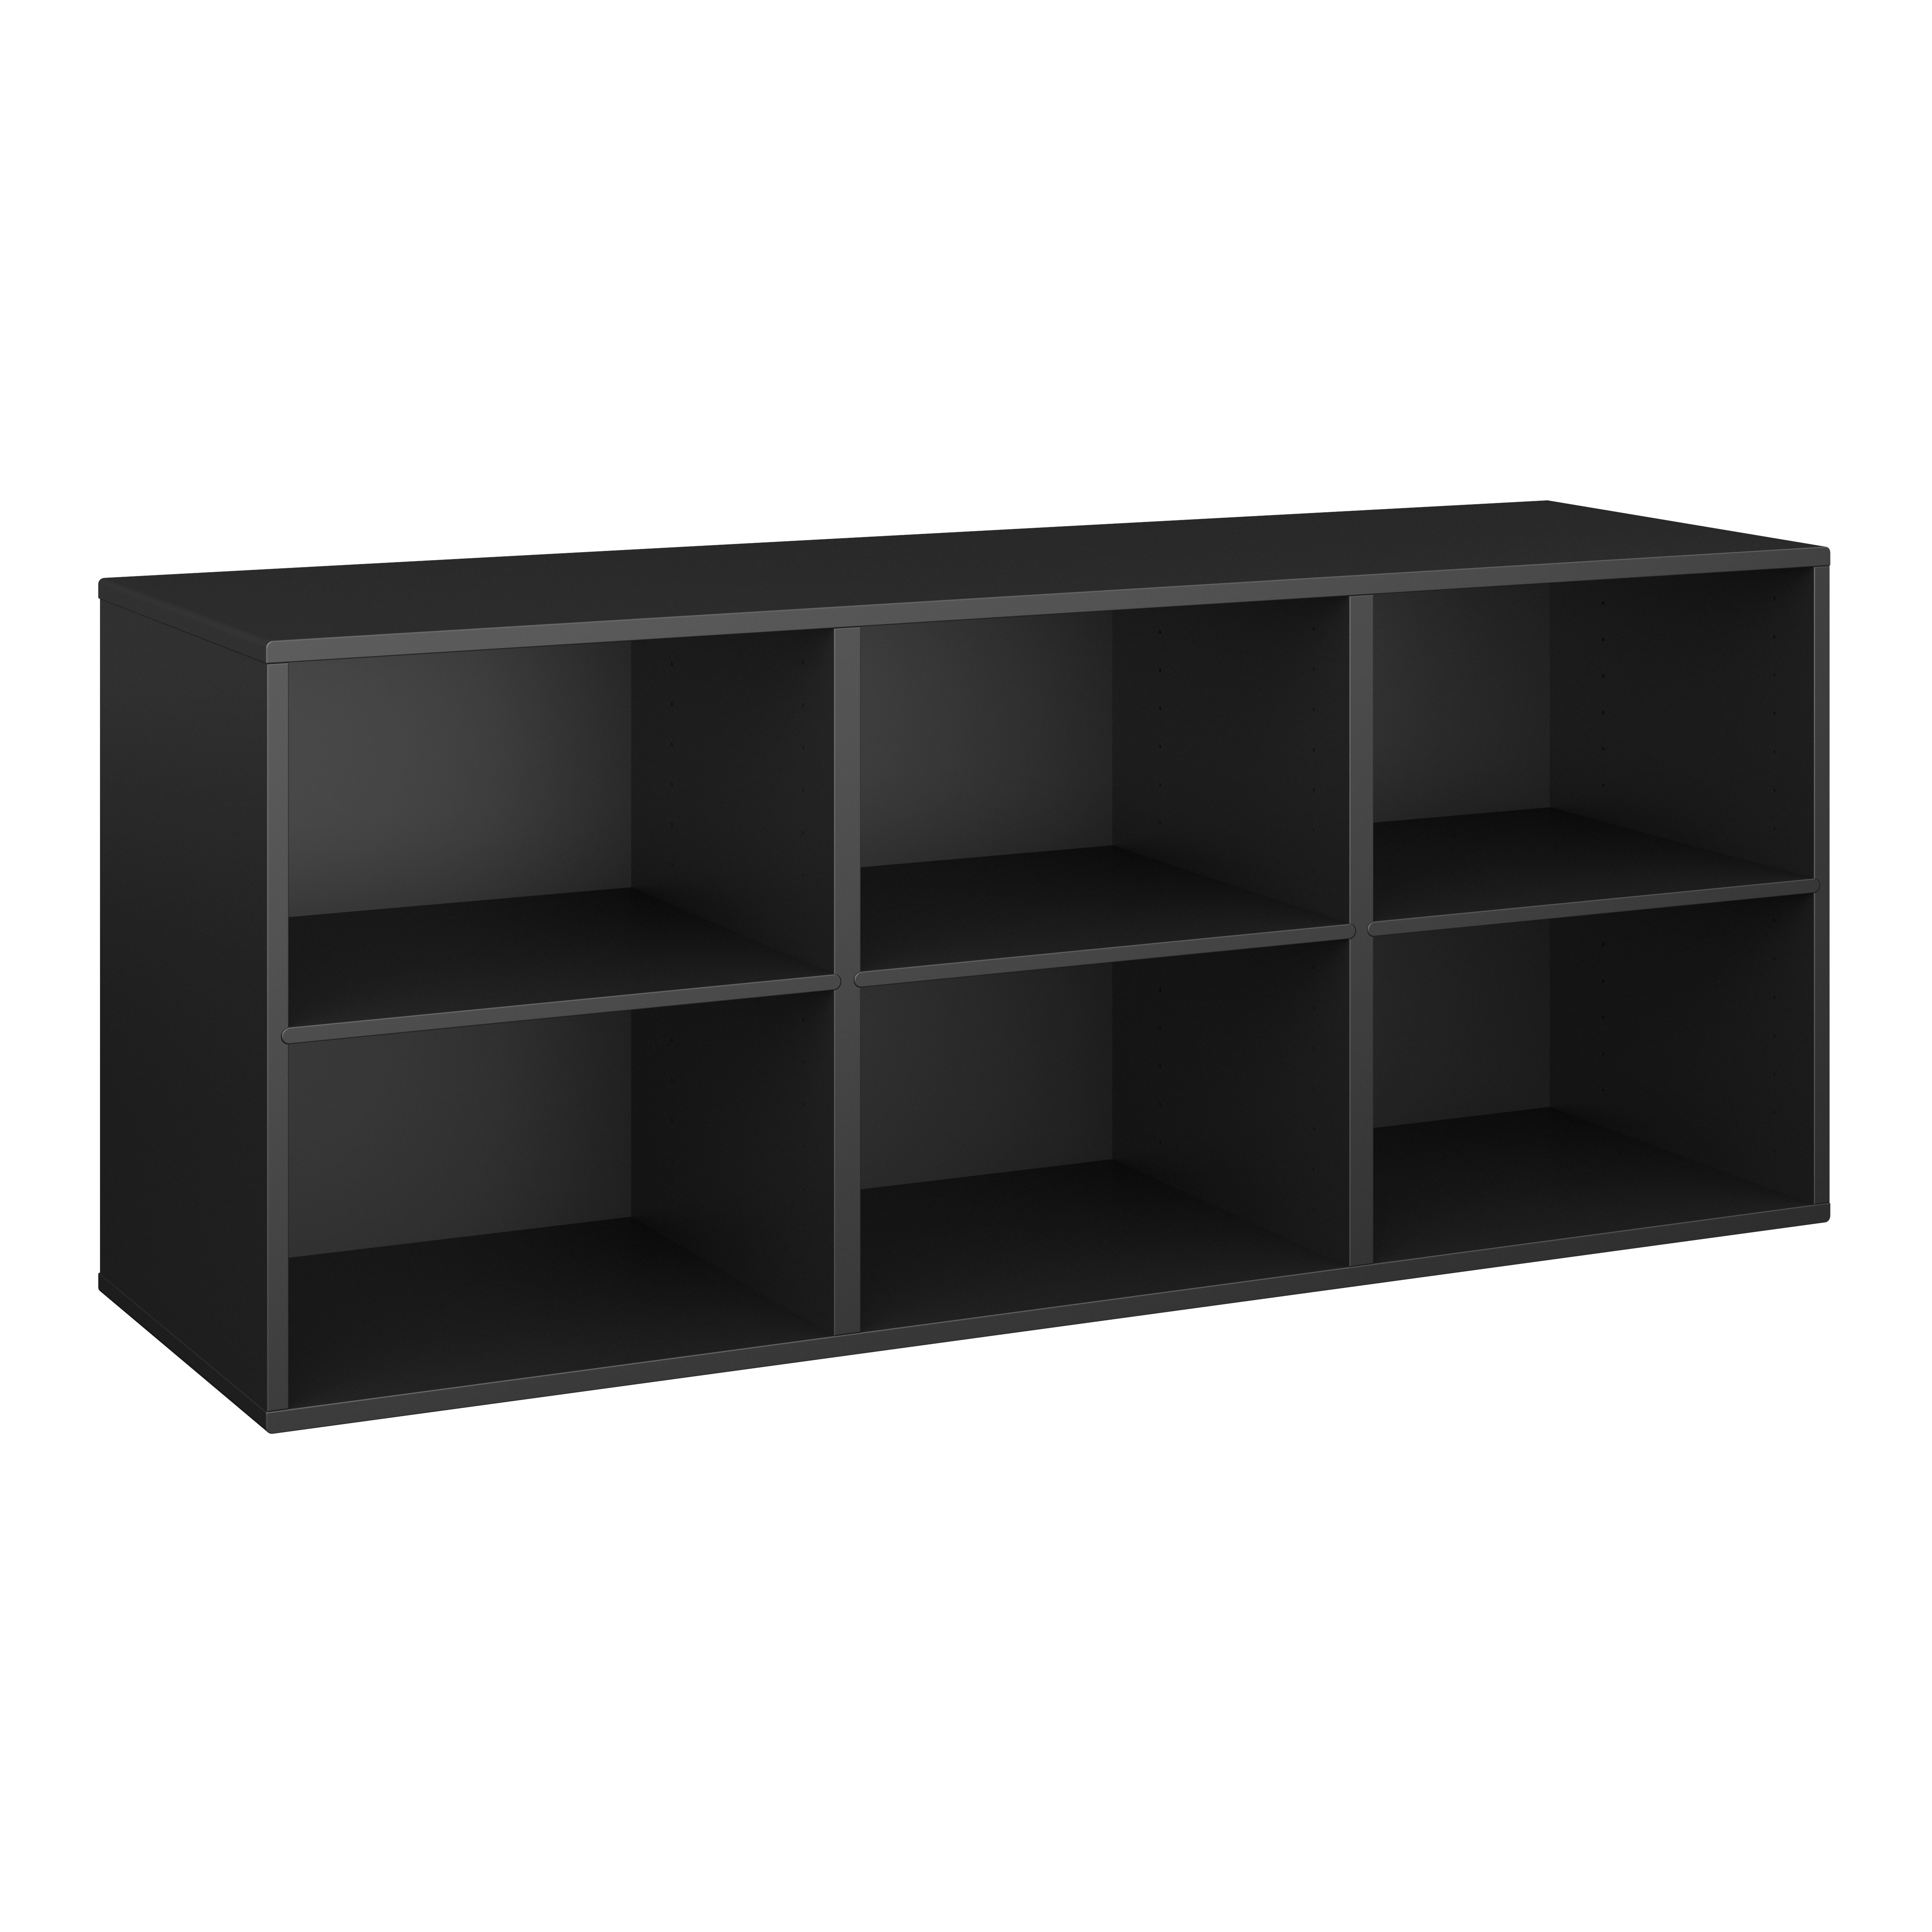 Hammel Furniture Standard-Bücherregal Keep 56 cm x 134